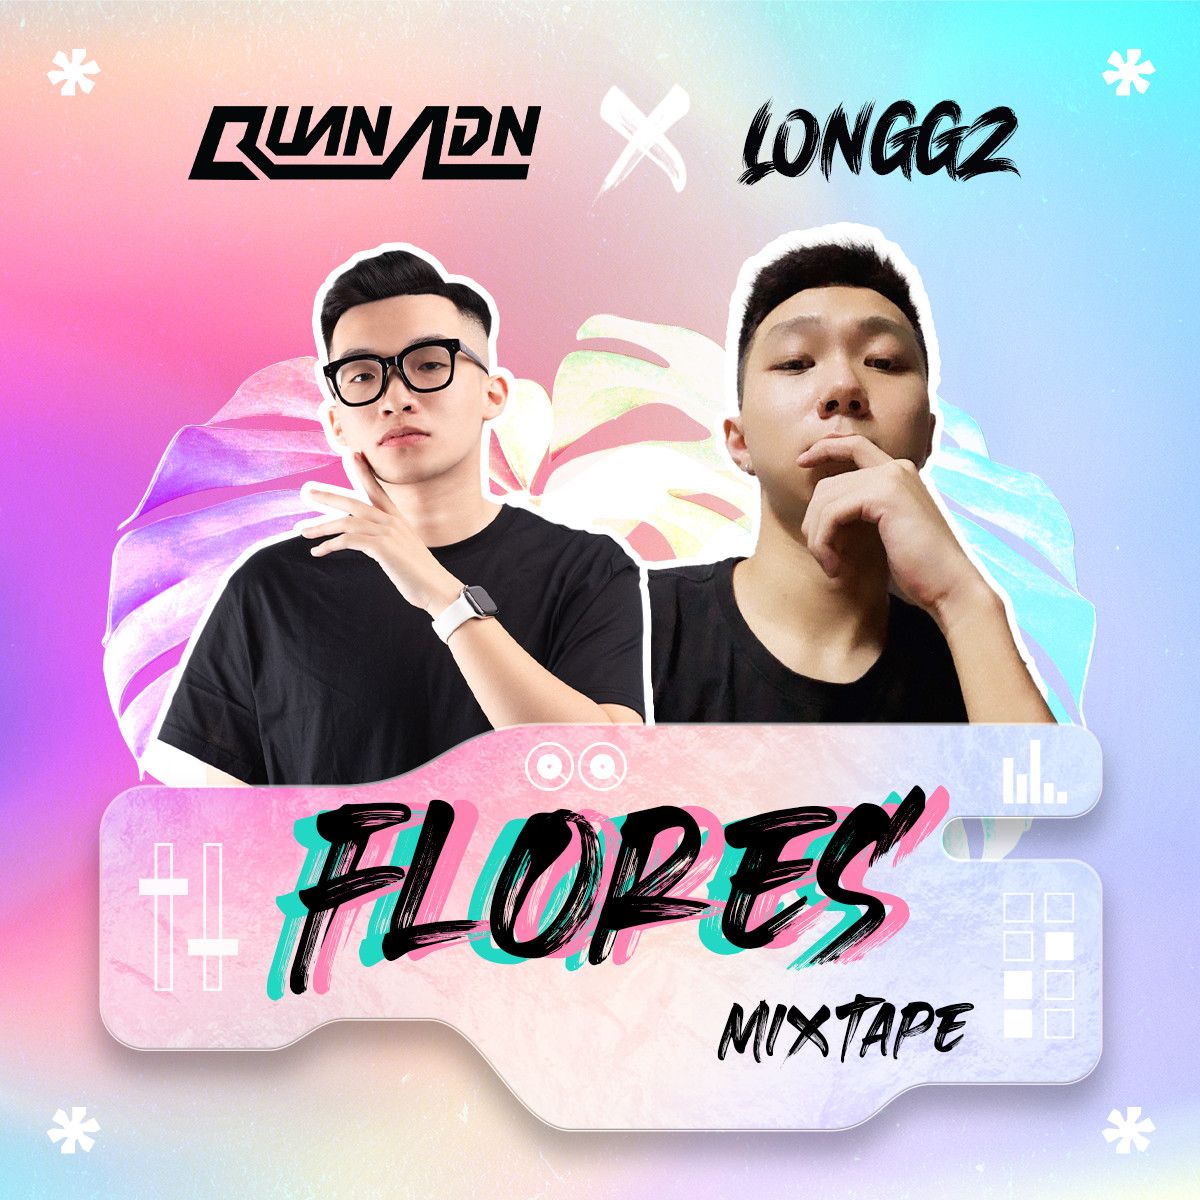 Budata Mixtape - Flores by Quan ADN & LONGGZ